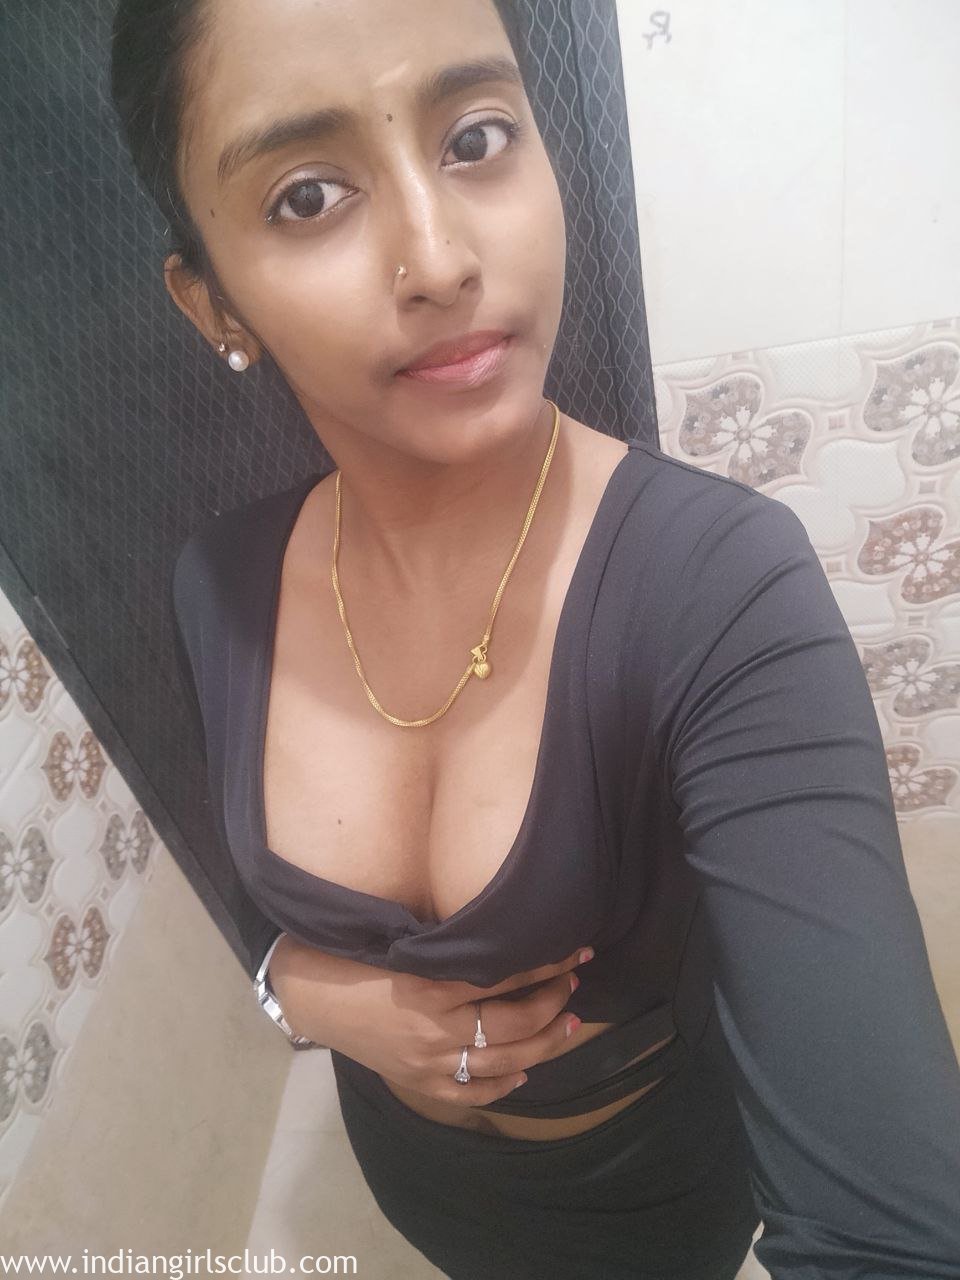 Tamil girls boobs show